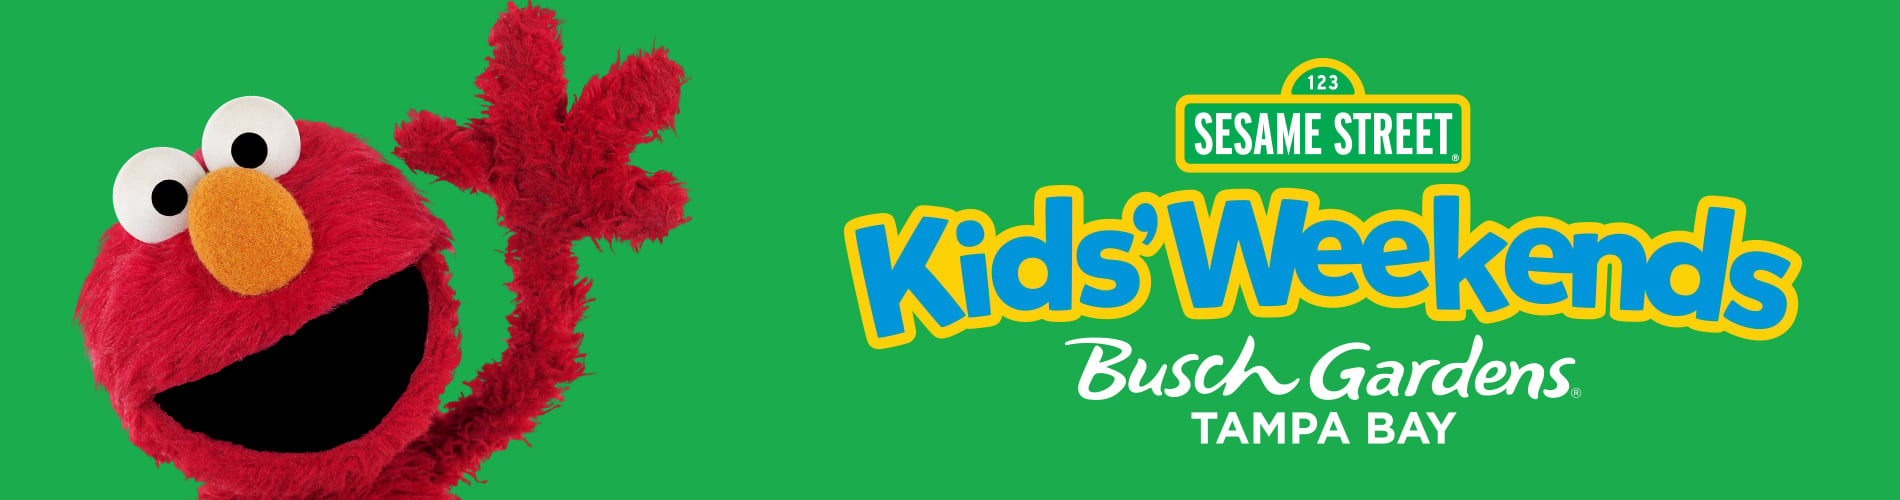 Sesame Street Kids' Weekends at Busch Gardens Tampa Bay